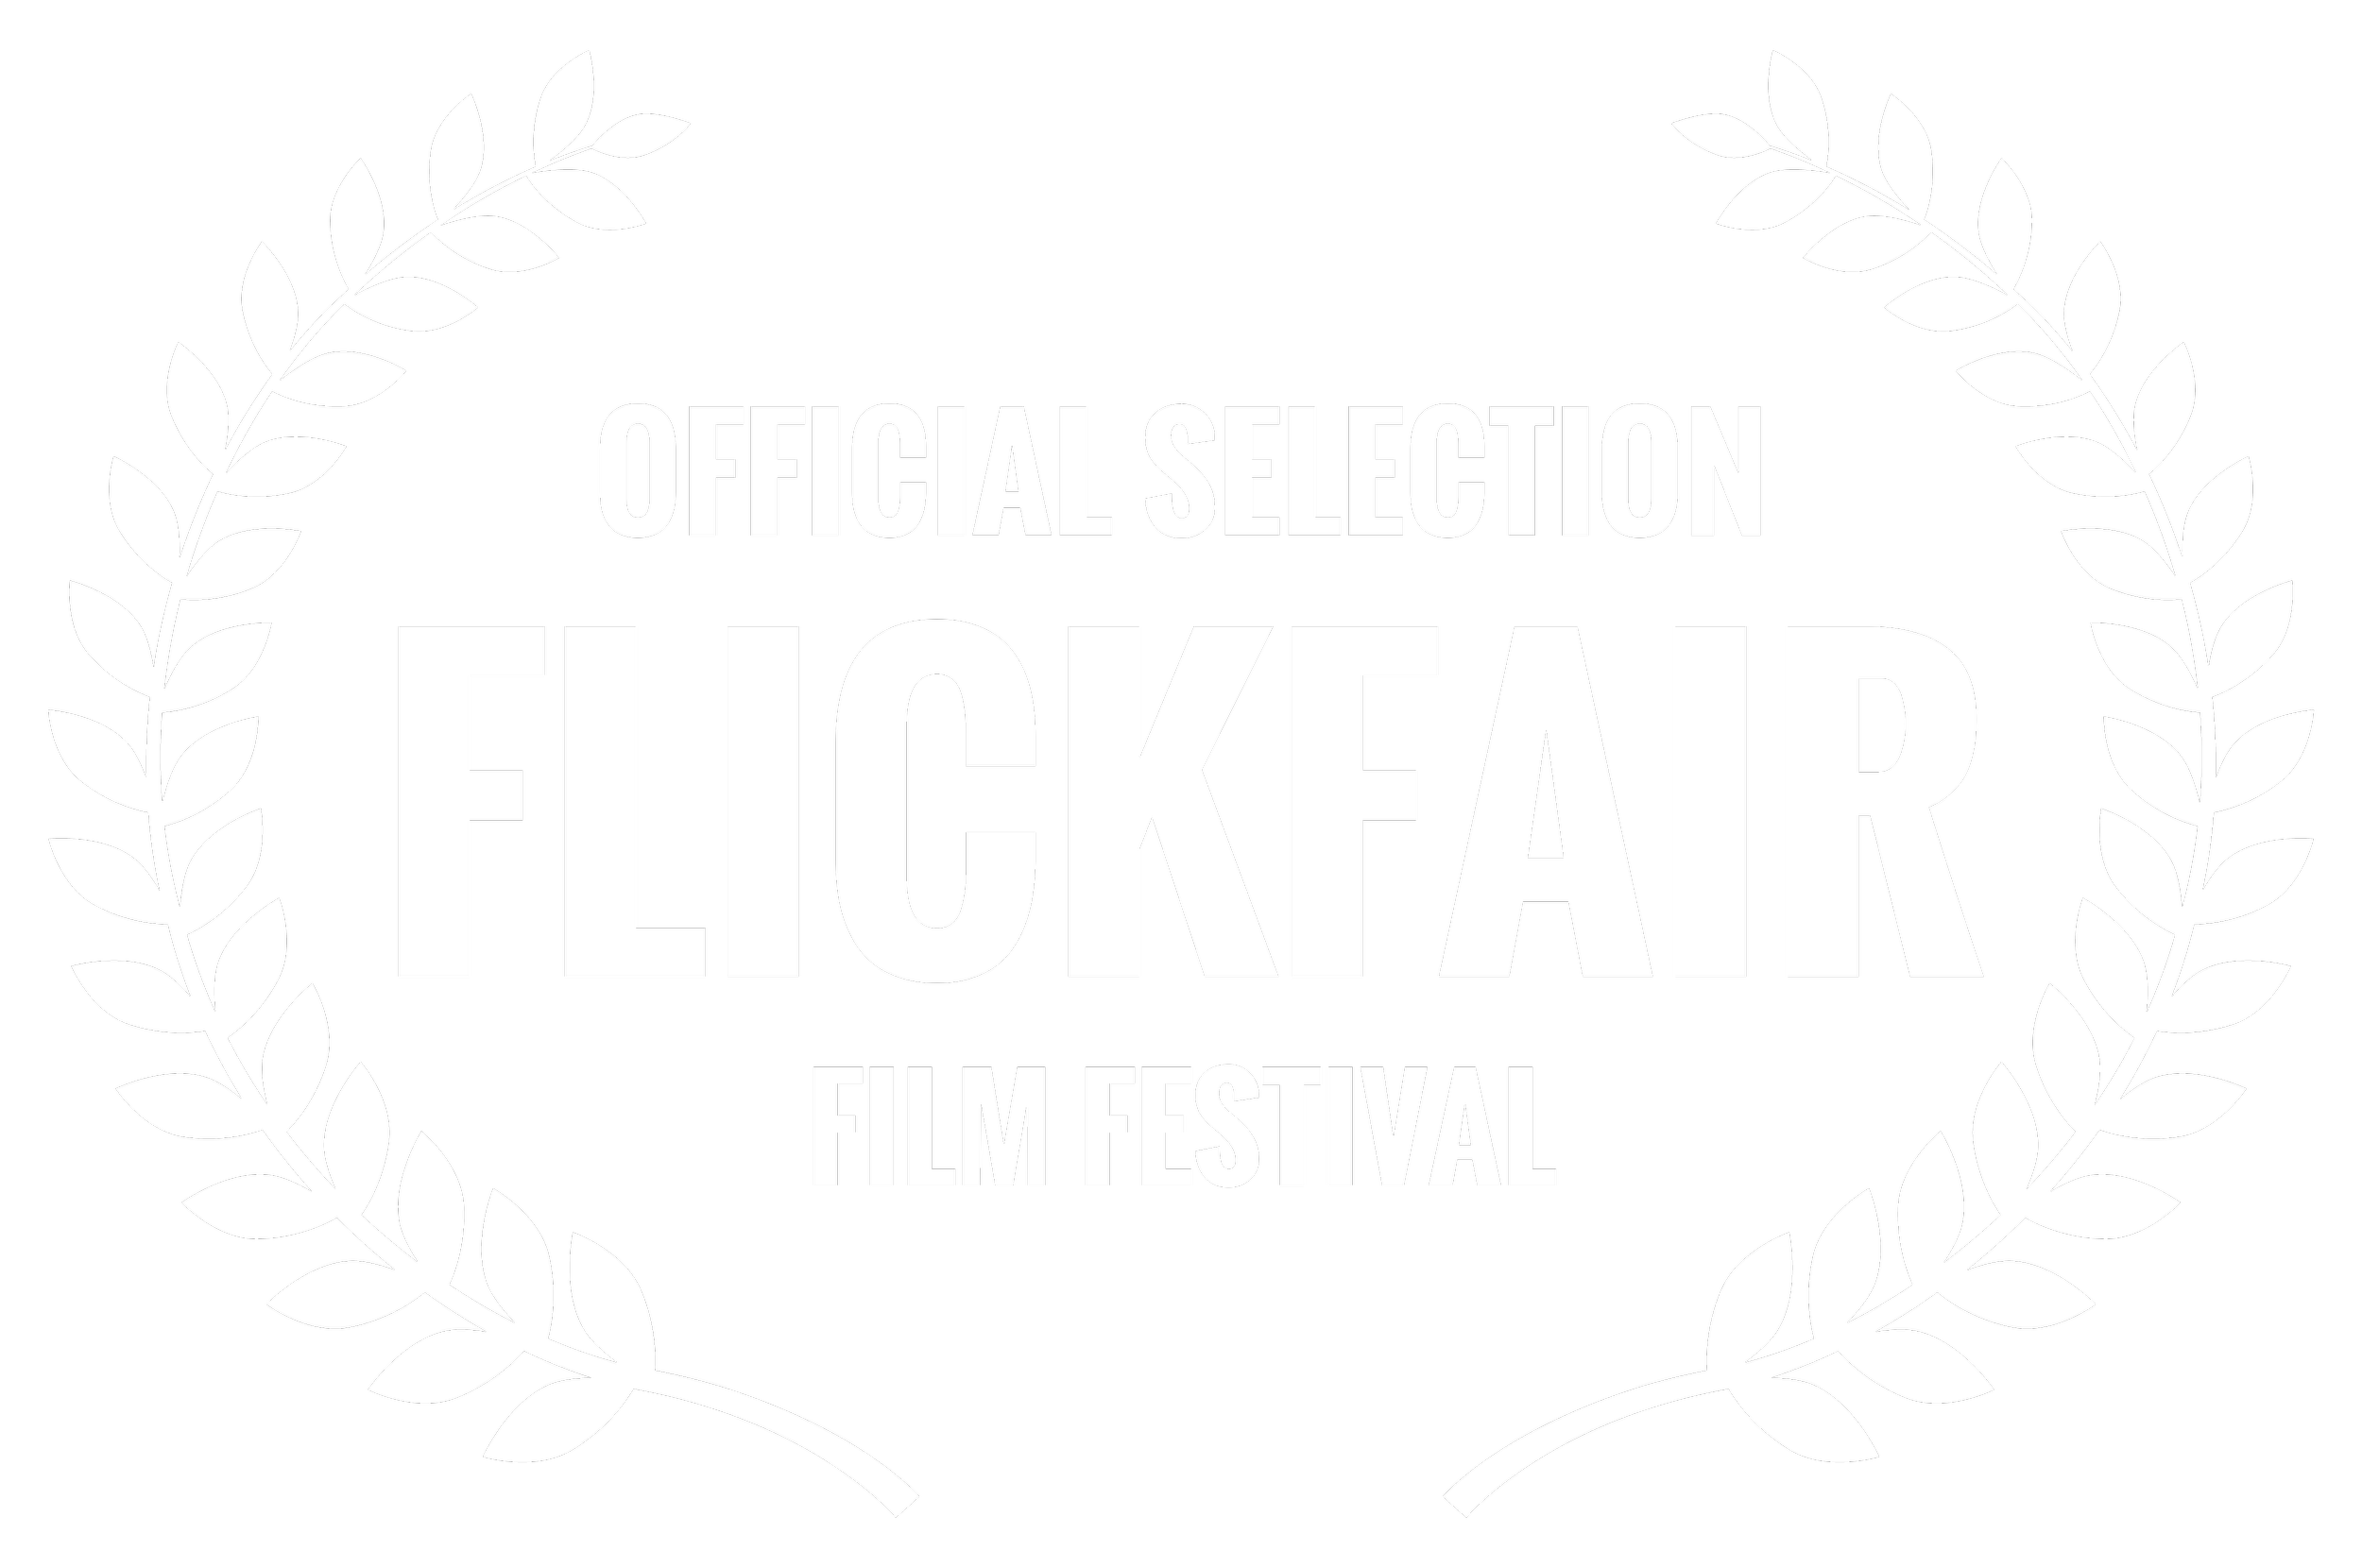 OFFICIALSELECTION-FLICKFAIR-FILMFESTIVAL.png